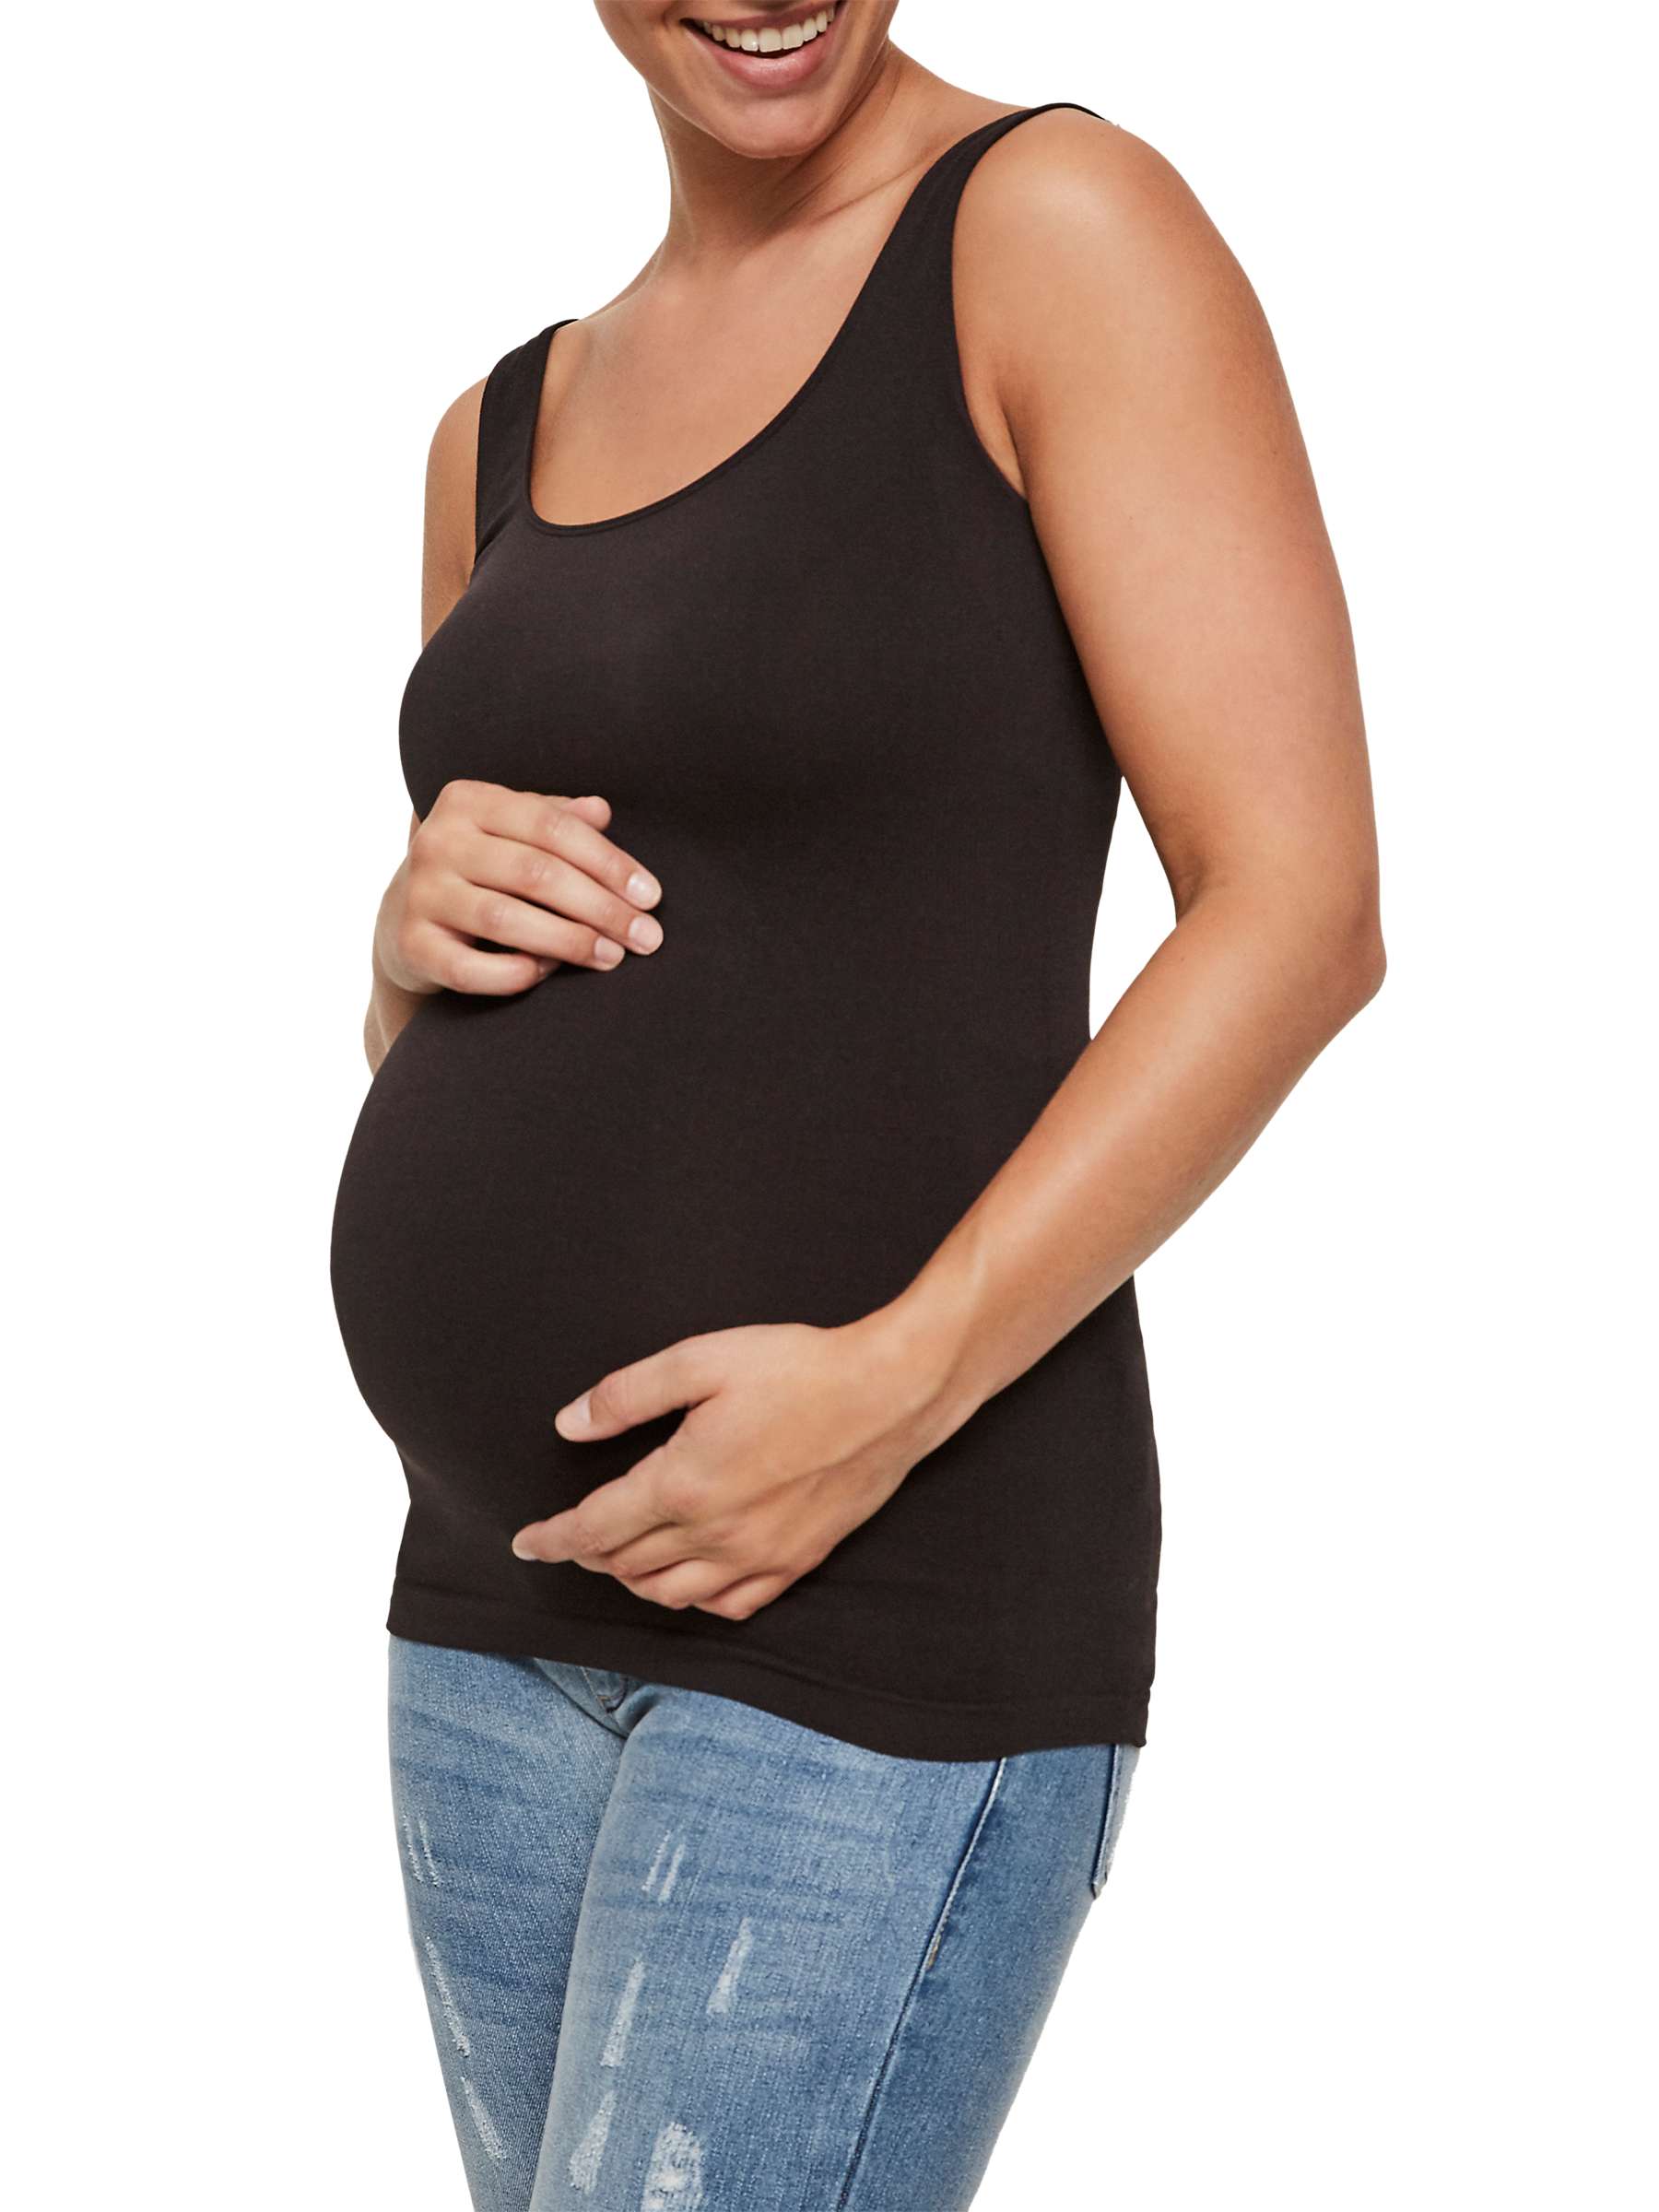 Maternity Support Vest Tank Top 10-14 Mamalicious Heal Seamfree White Blue Black 